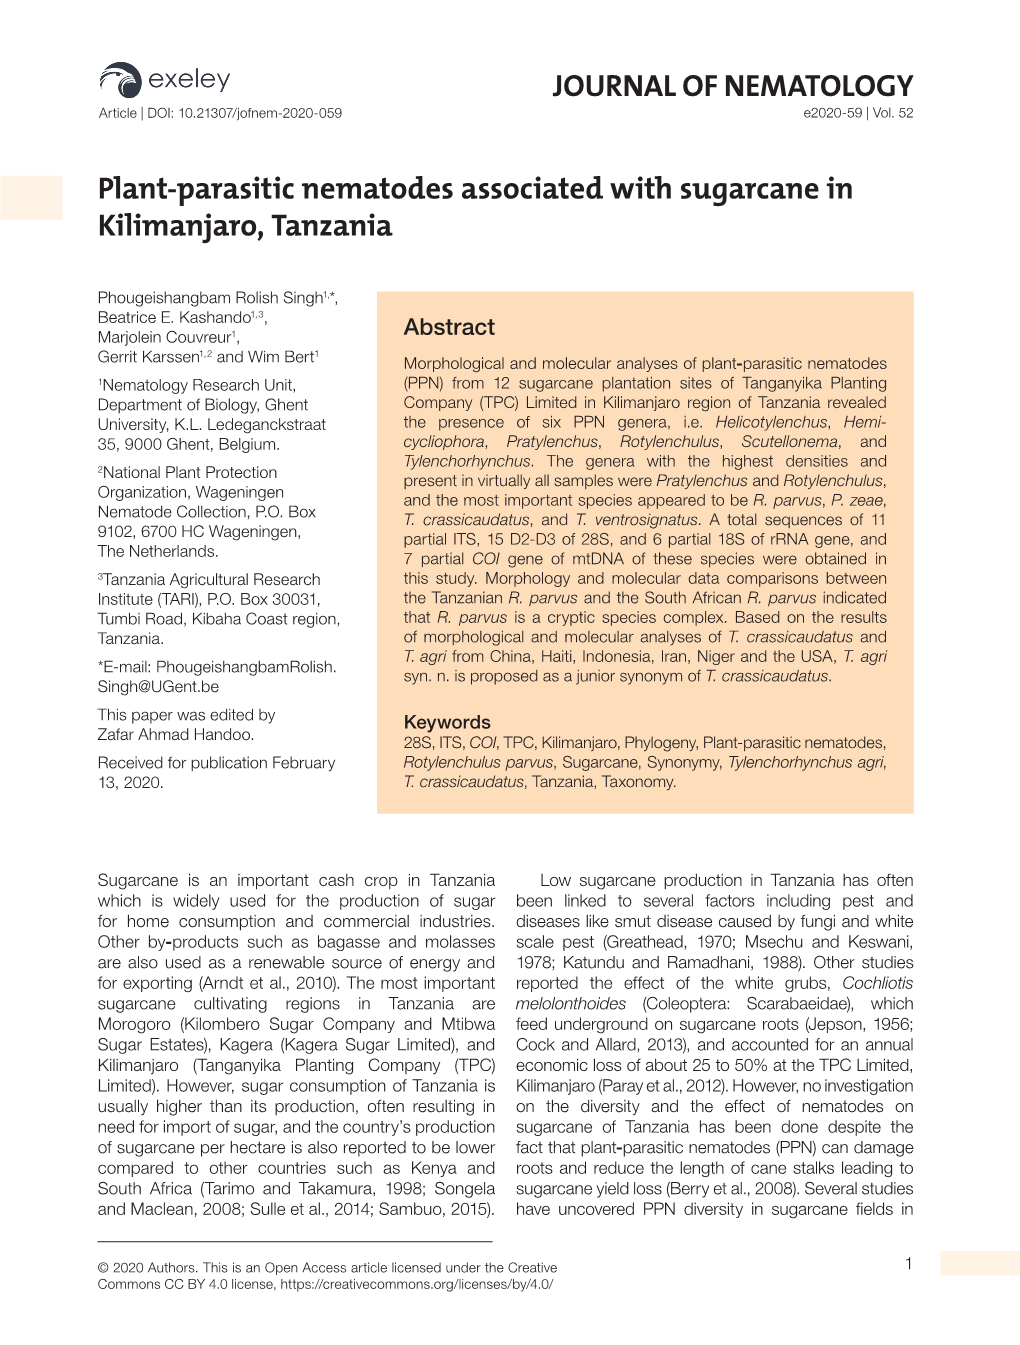 JOURNAL of NEMATOLOGY Plant-Parasitic Nematodes